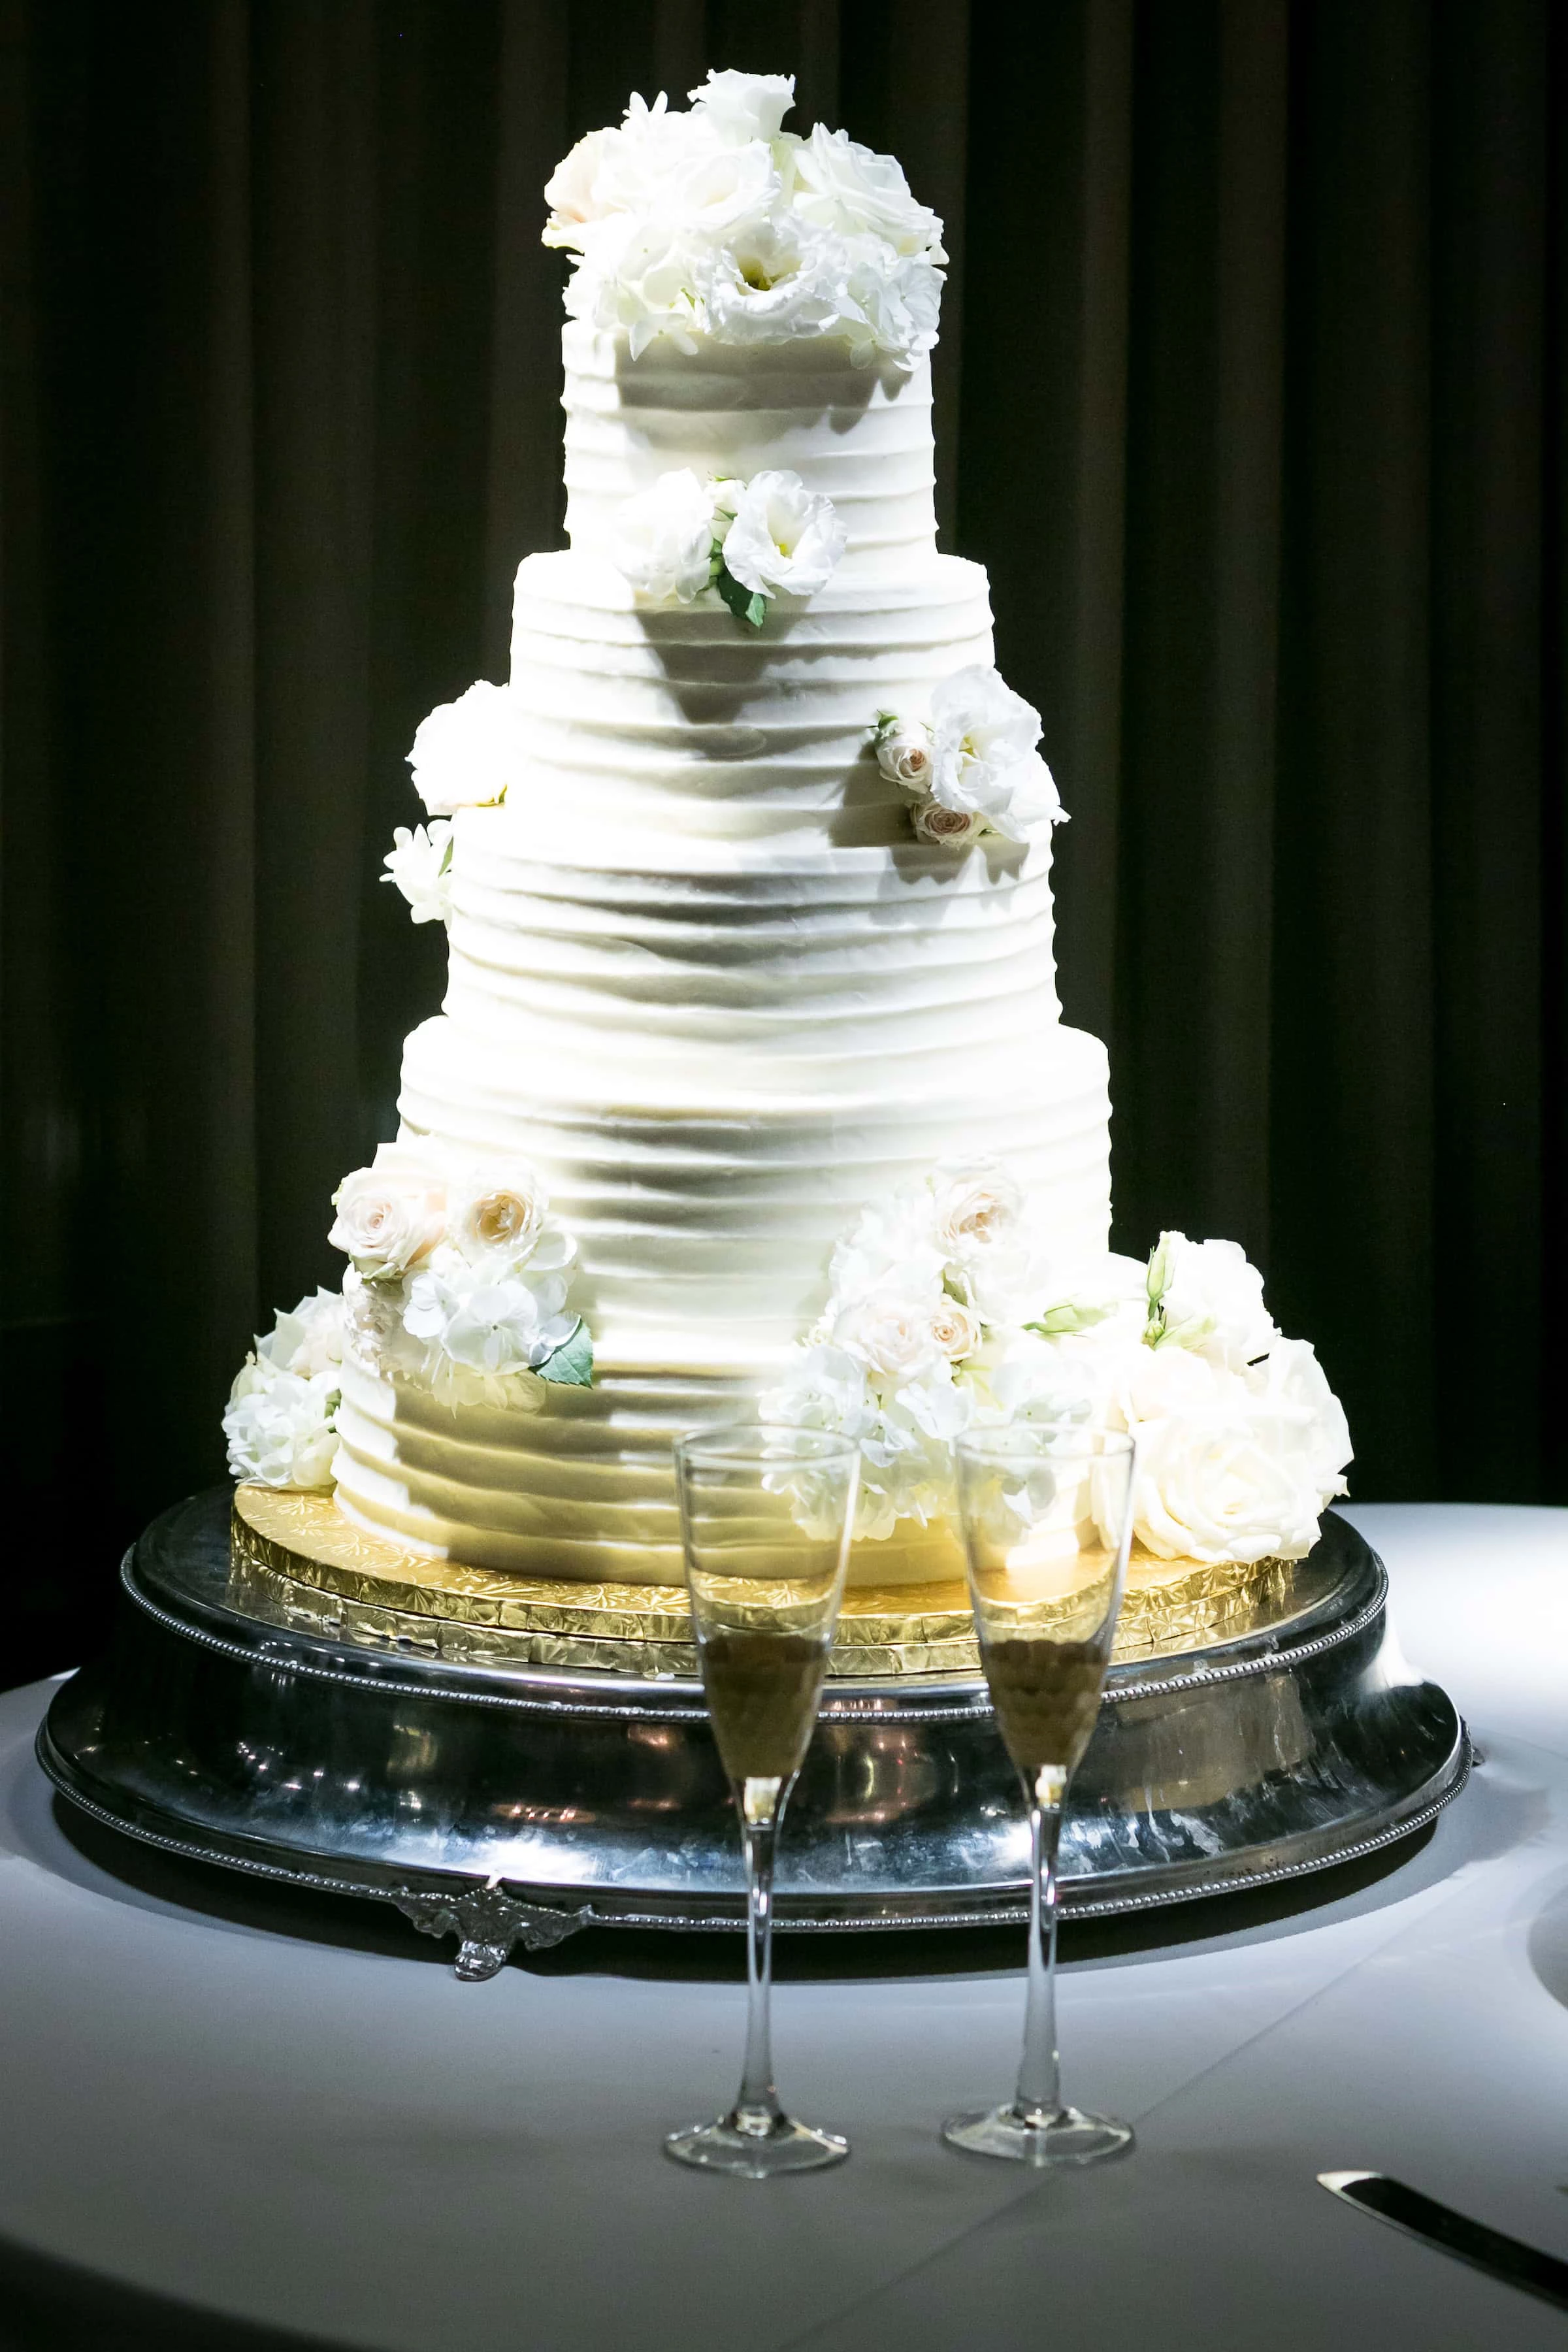 Gleneagles Country Club - Wedding Cake